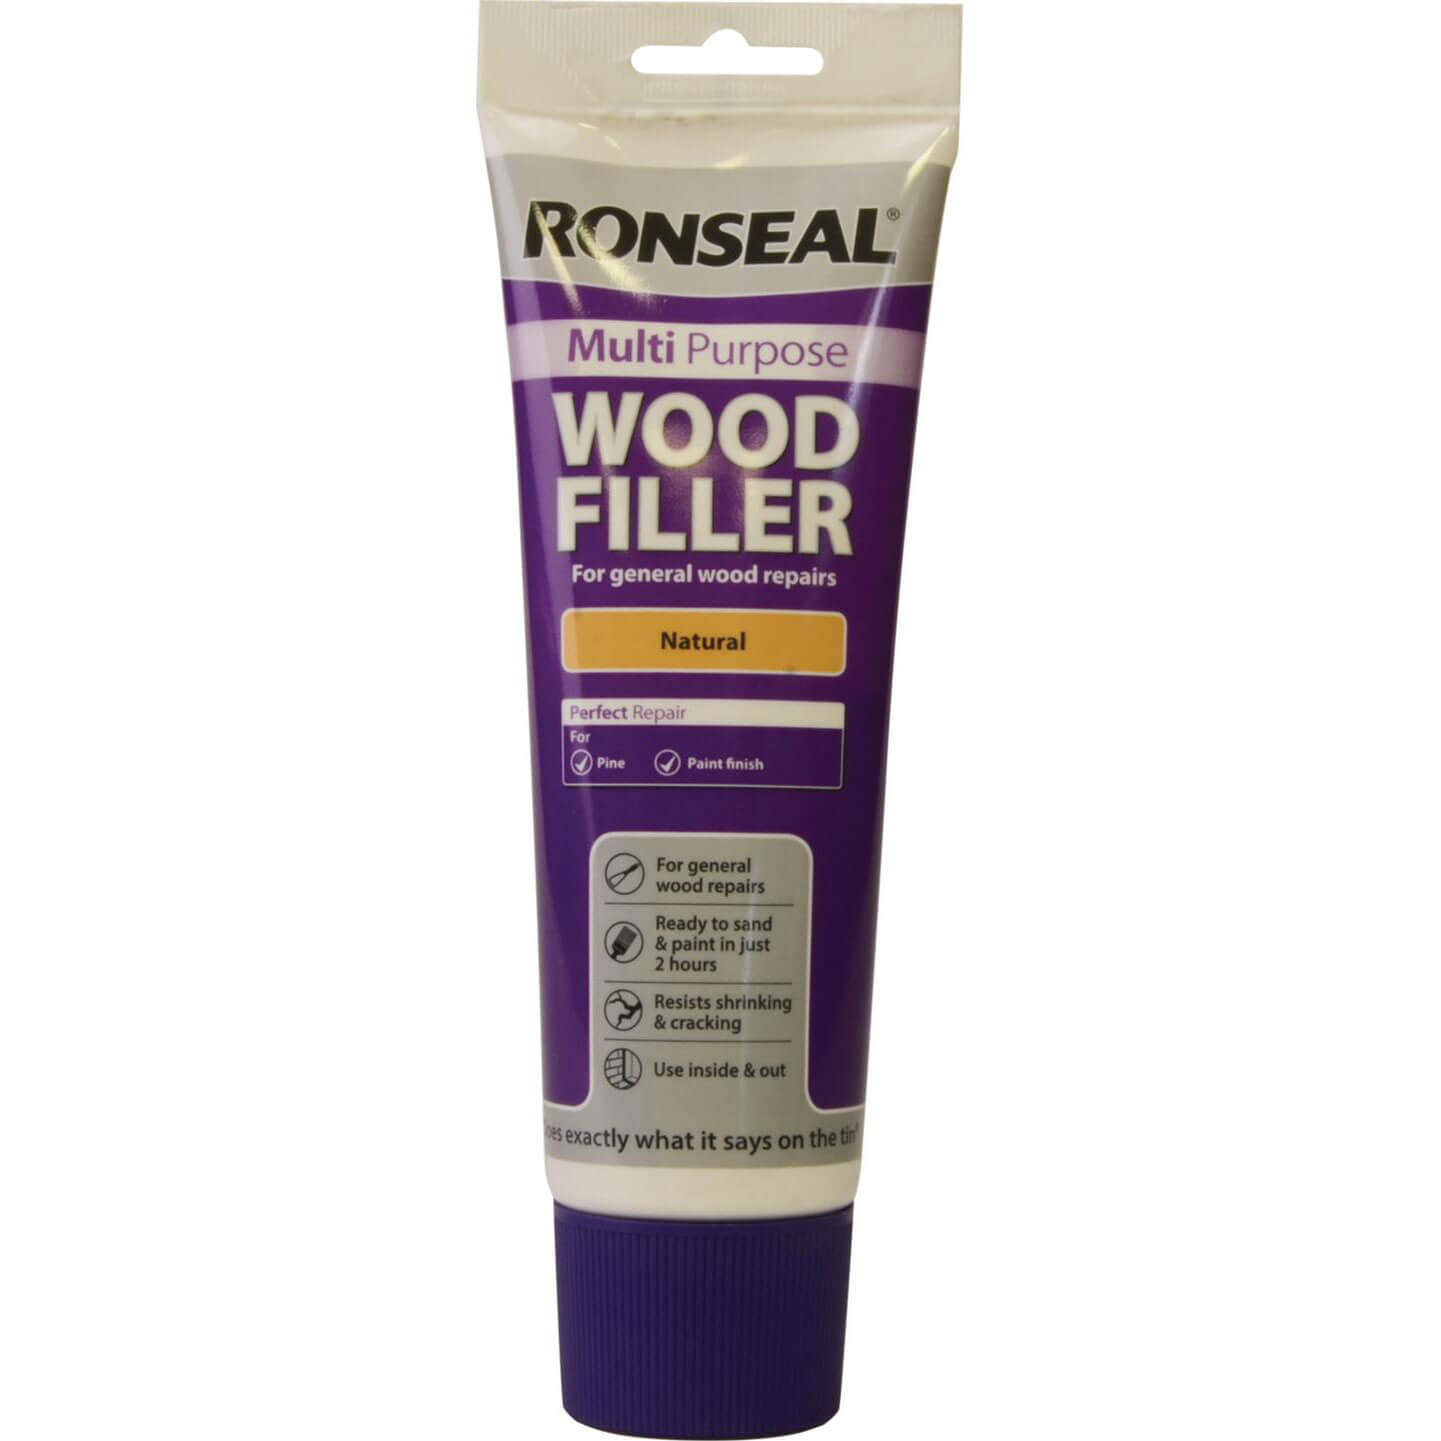 Image of Ronseal Multi Purpose Wood Filler Tube Natural 325g